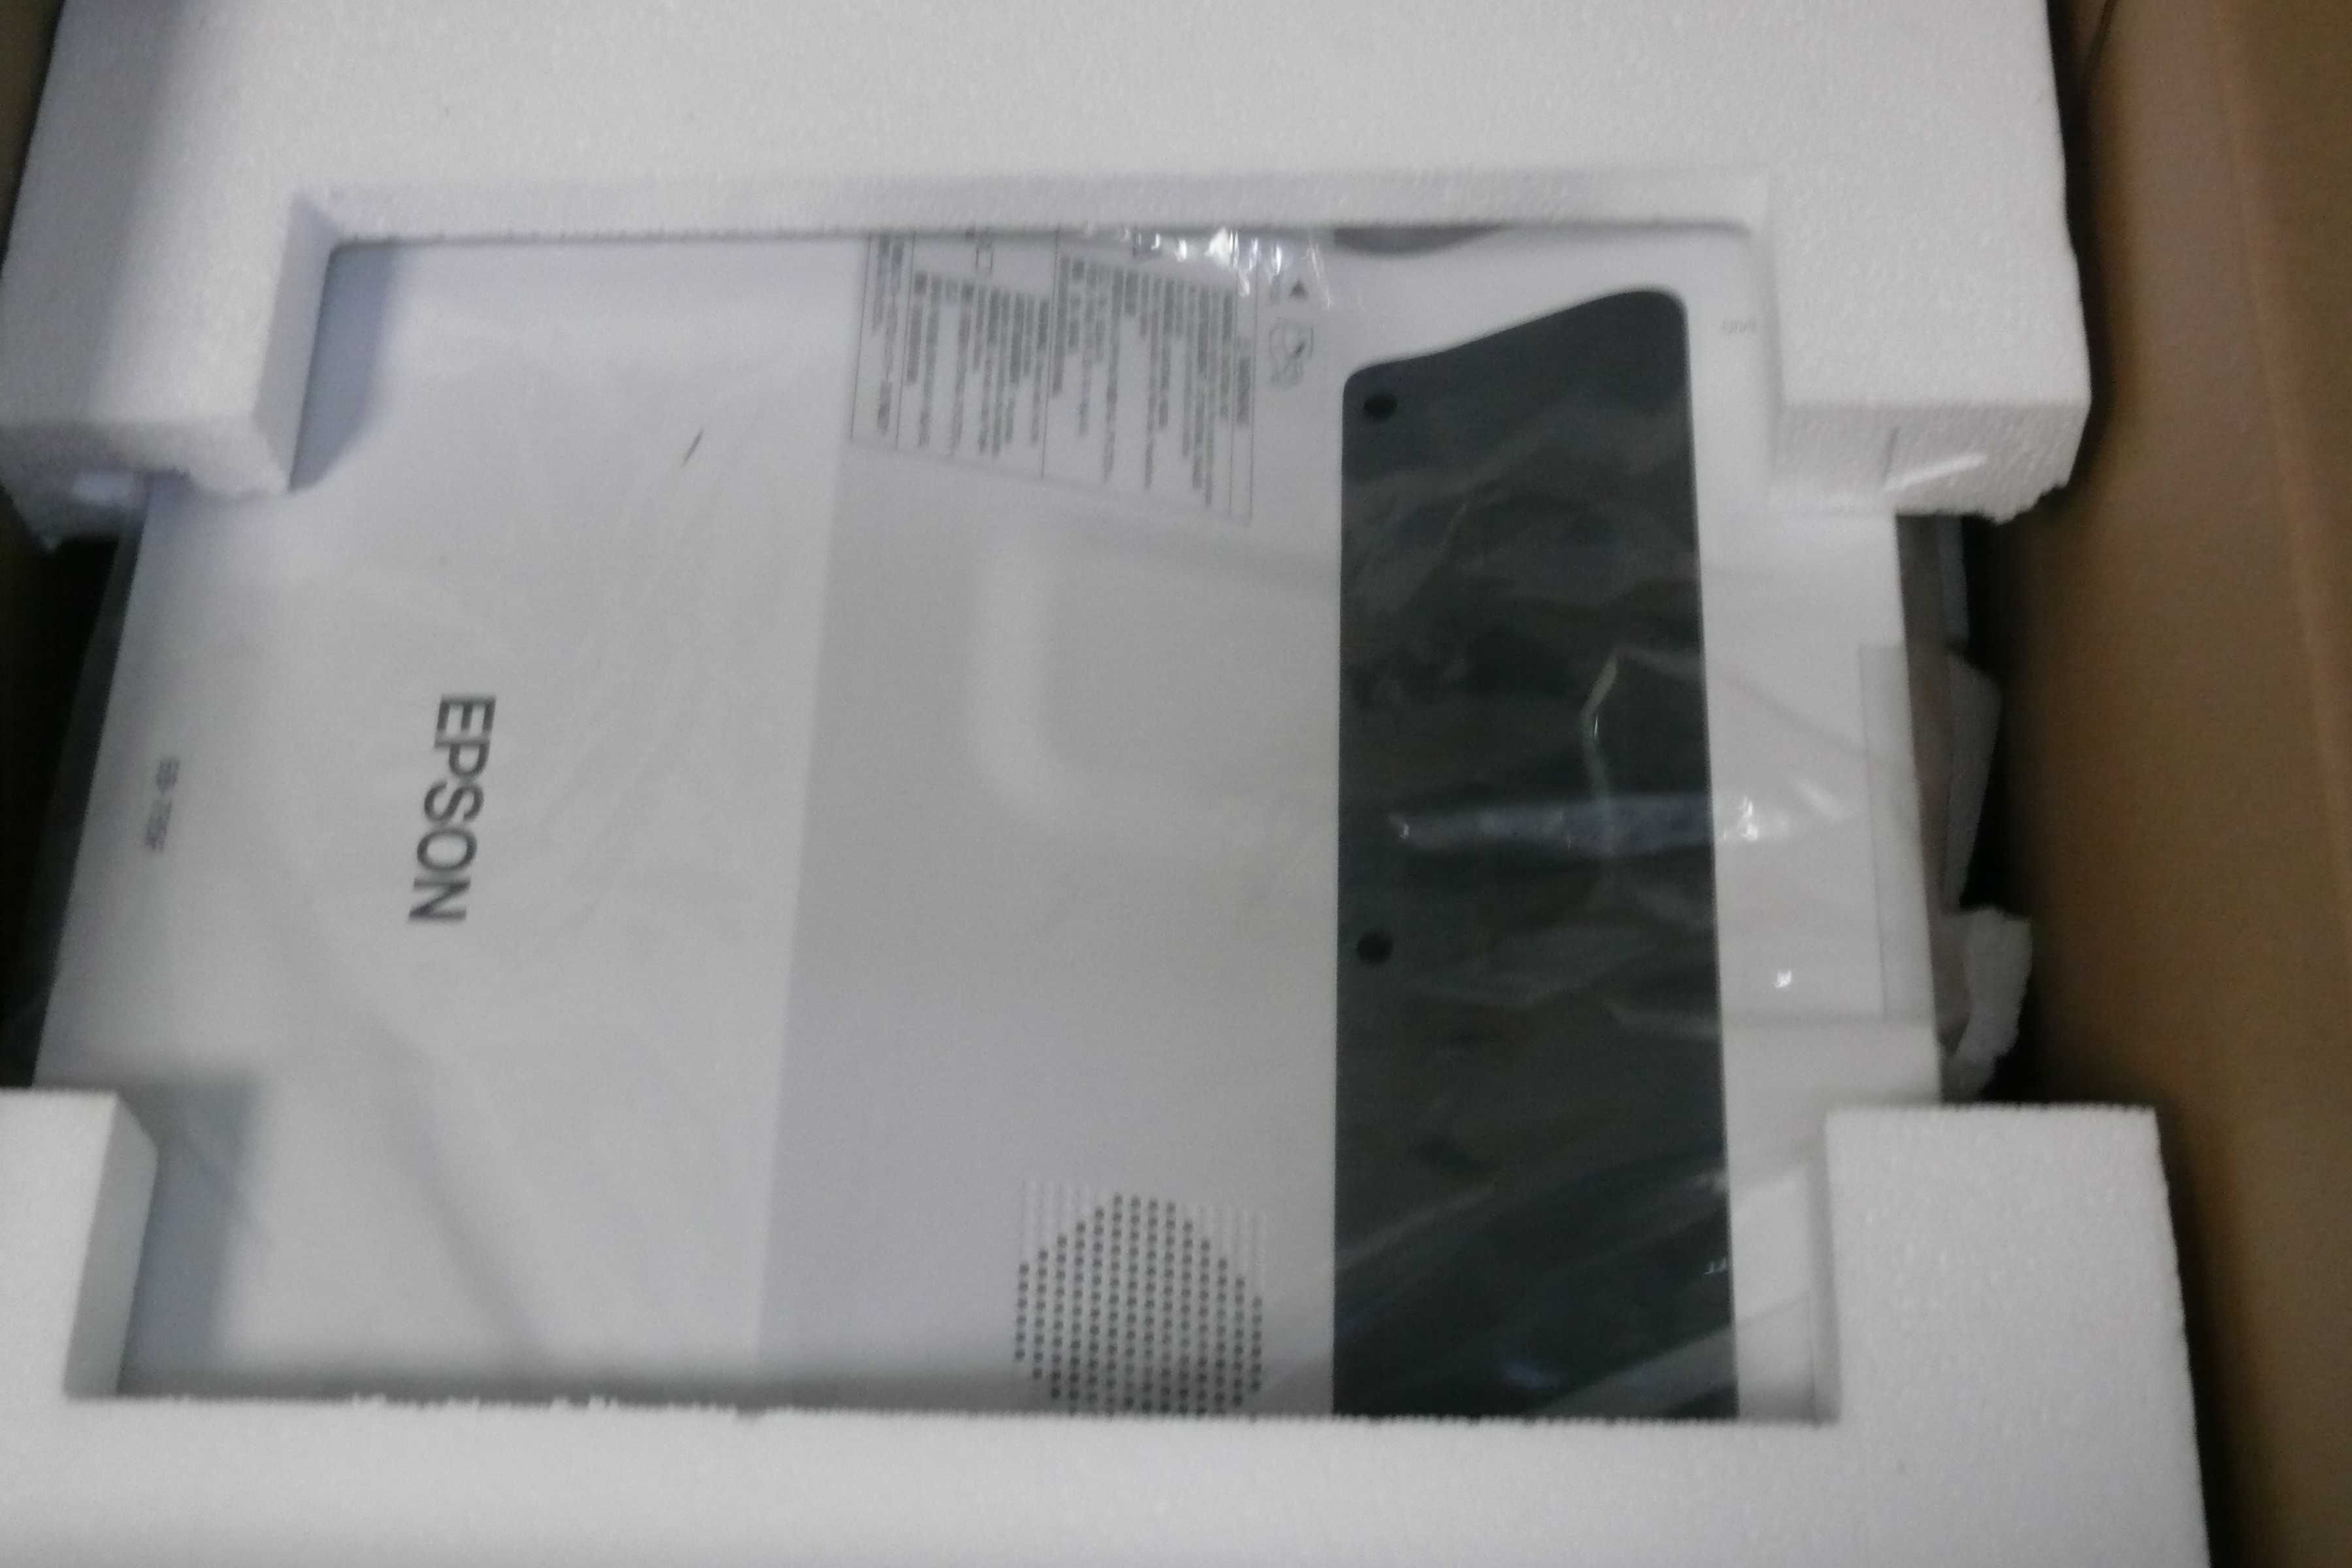 Projetor de Ultra Curta Distância Epson EB-735F | Branco